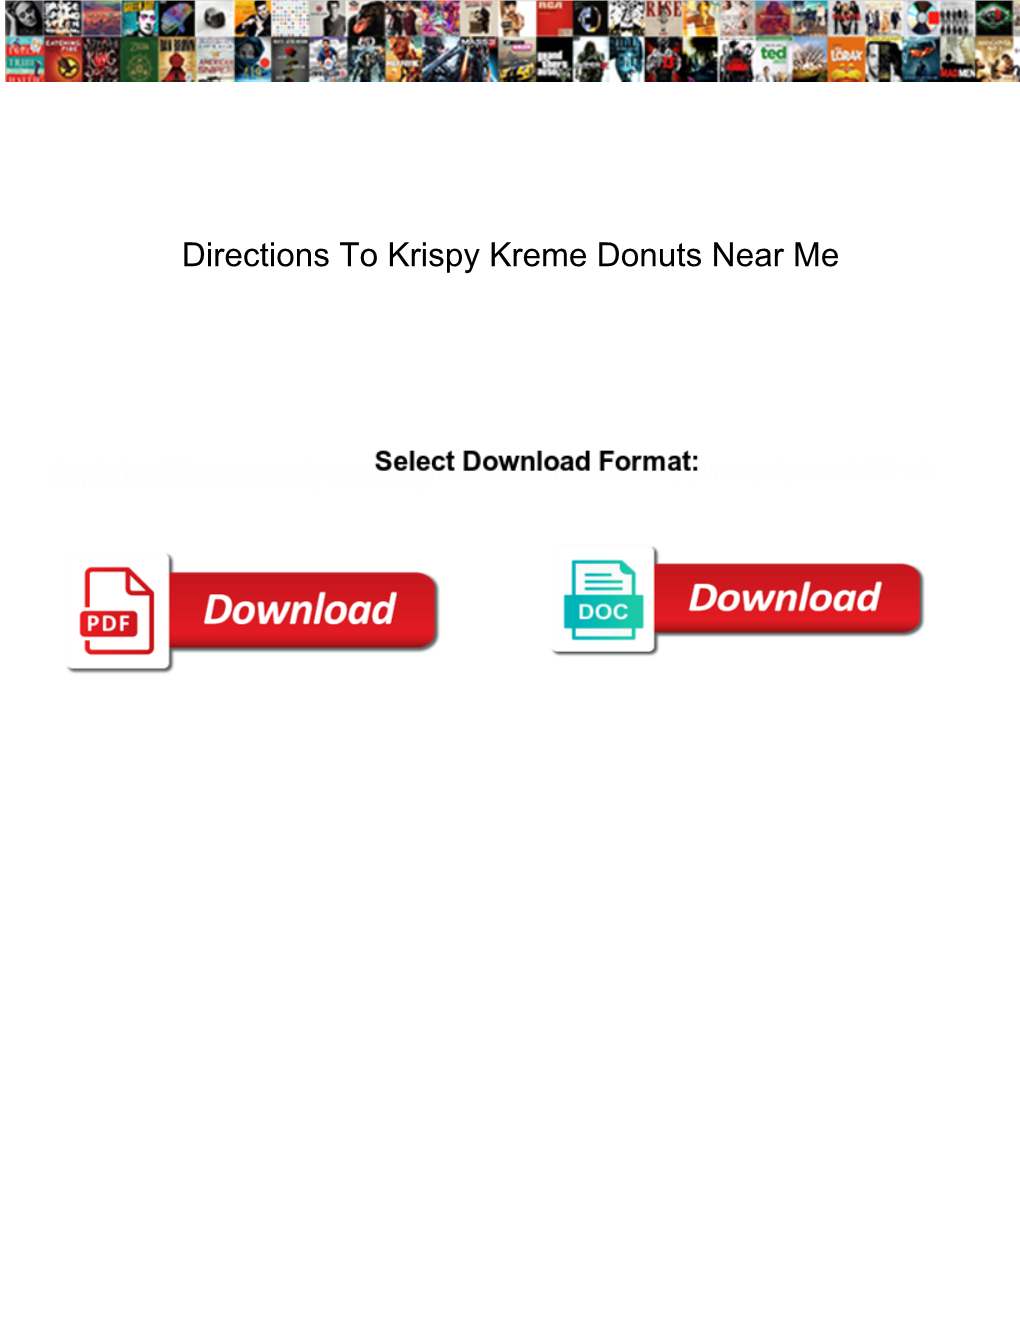 Directions to Krispy Kreme Donuts Near Me